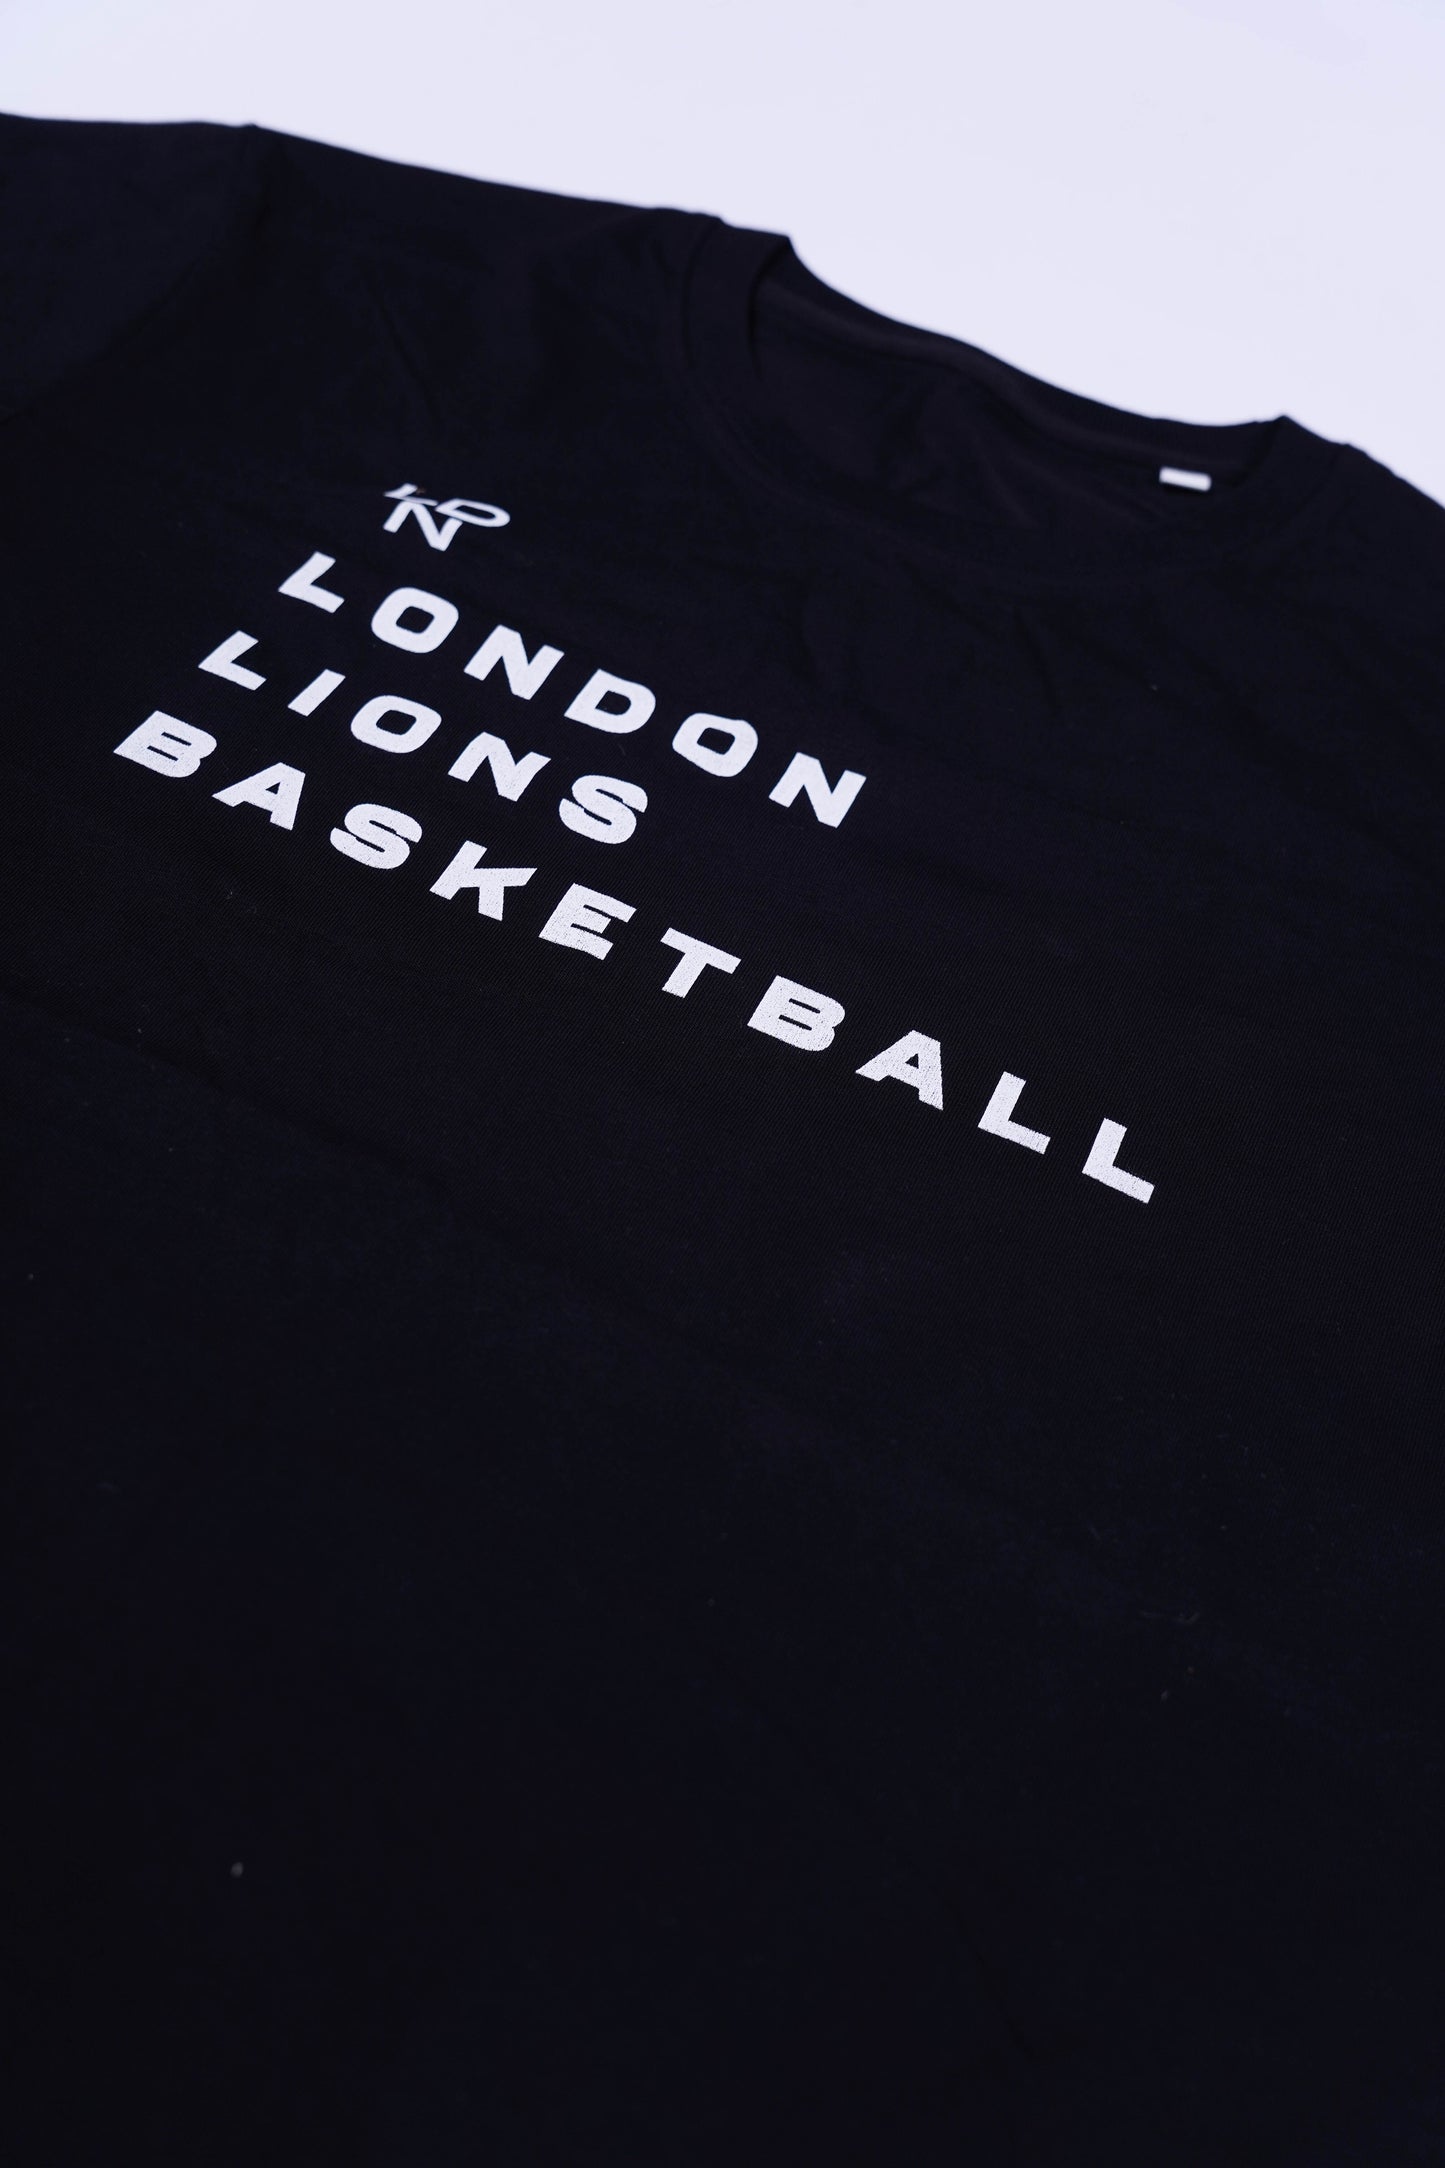 London Lions Team T-Shirt